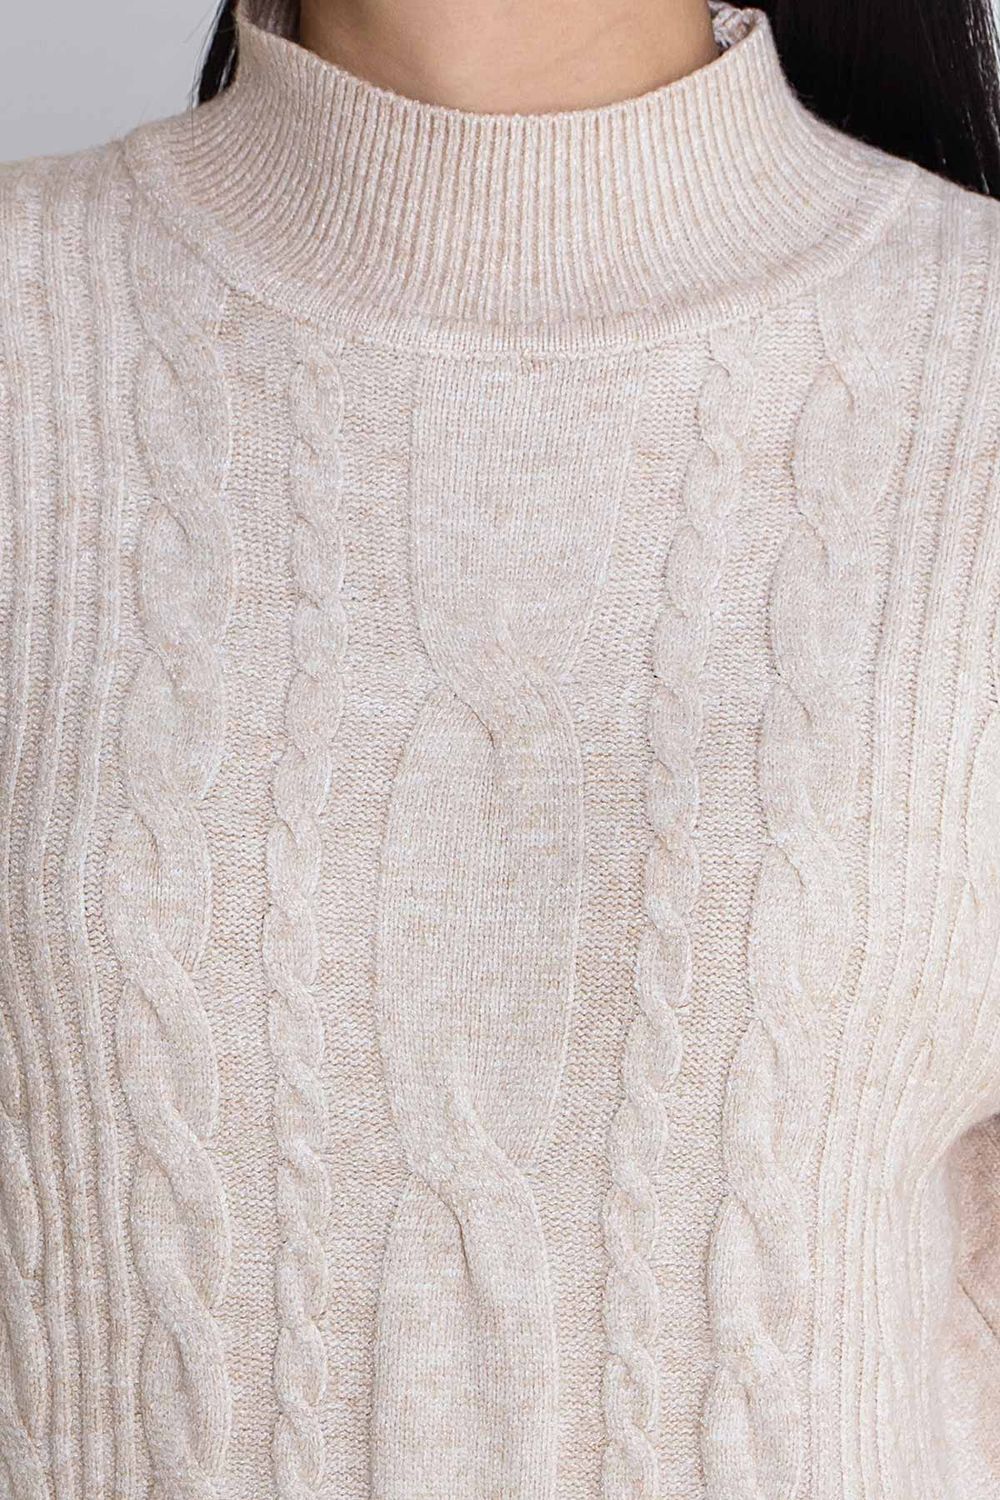 Женский вязаный свитер с узором косы бежевого цвета - фото